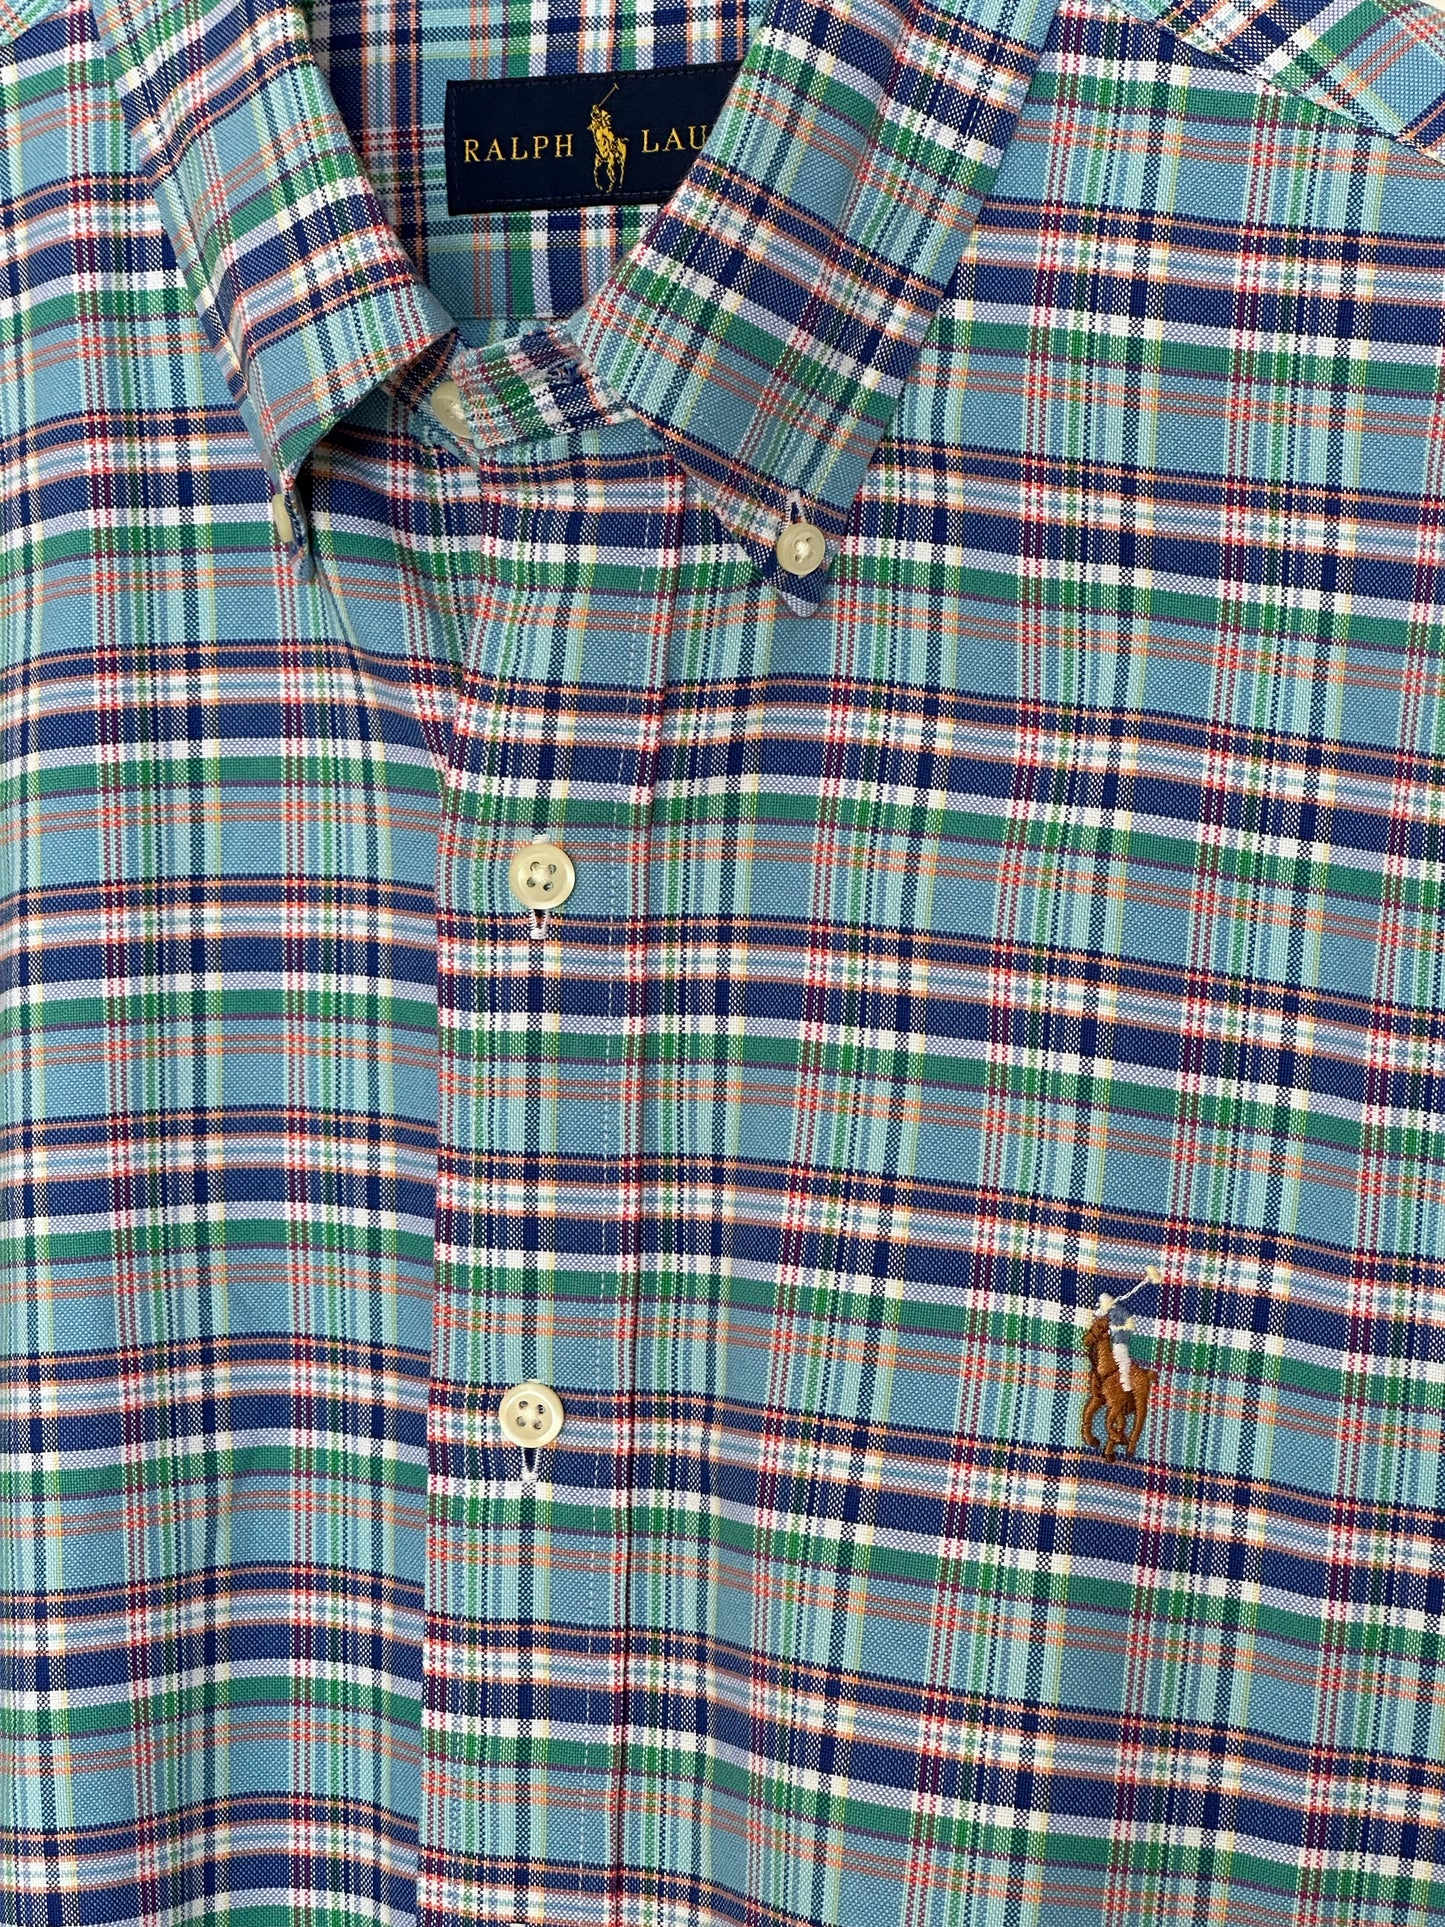 Amazing Polo Ralph Lauren plaid shirt